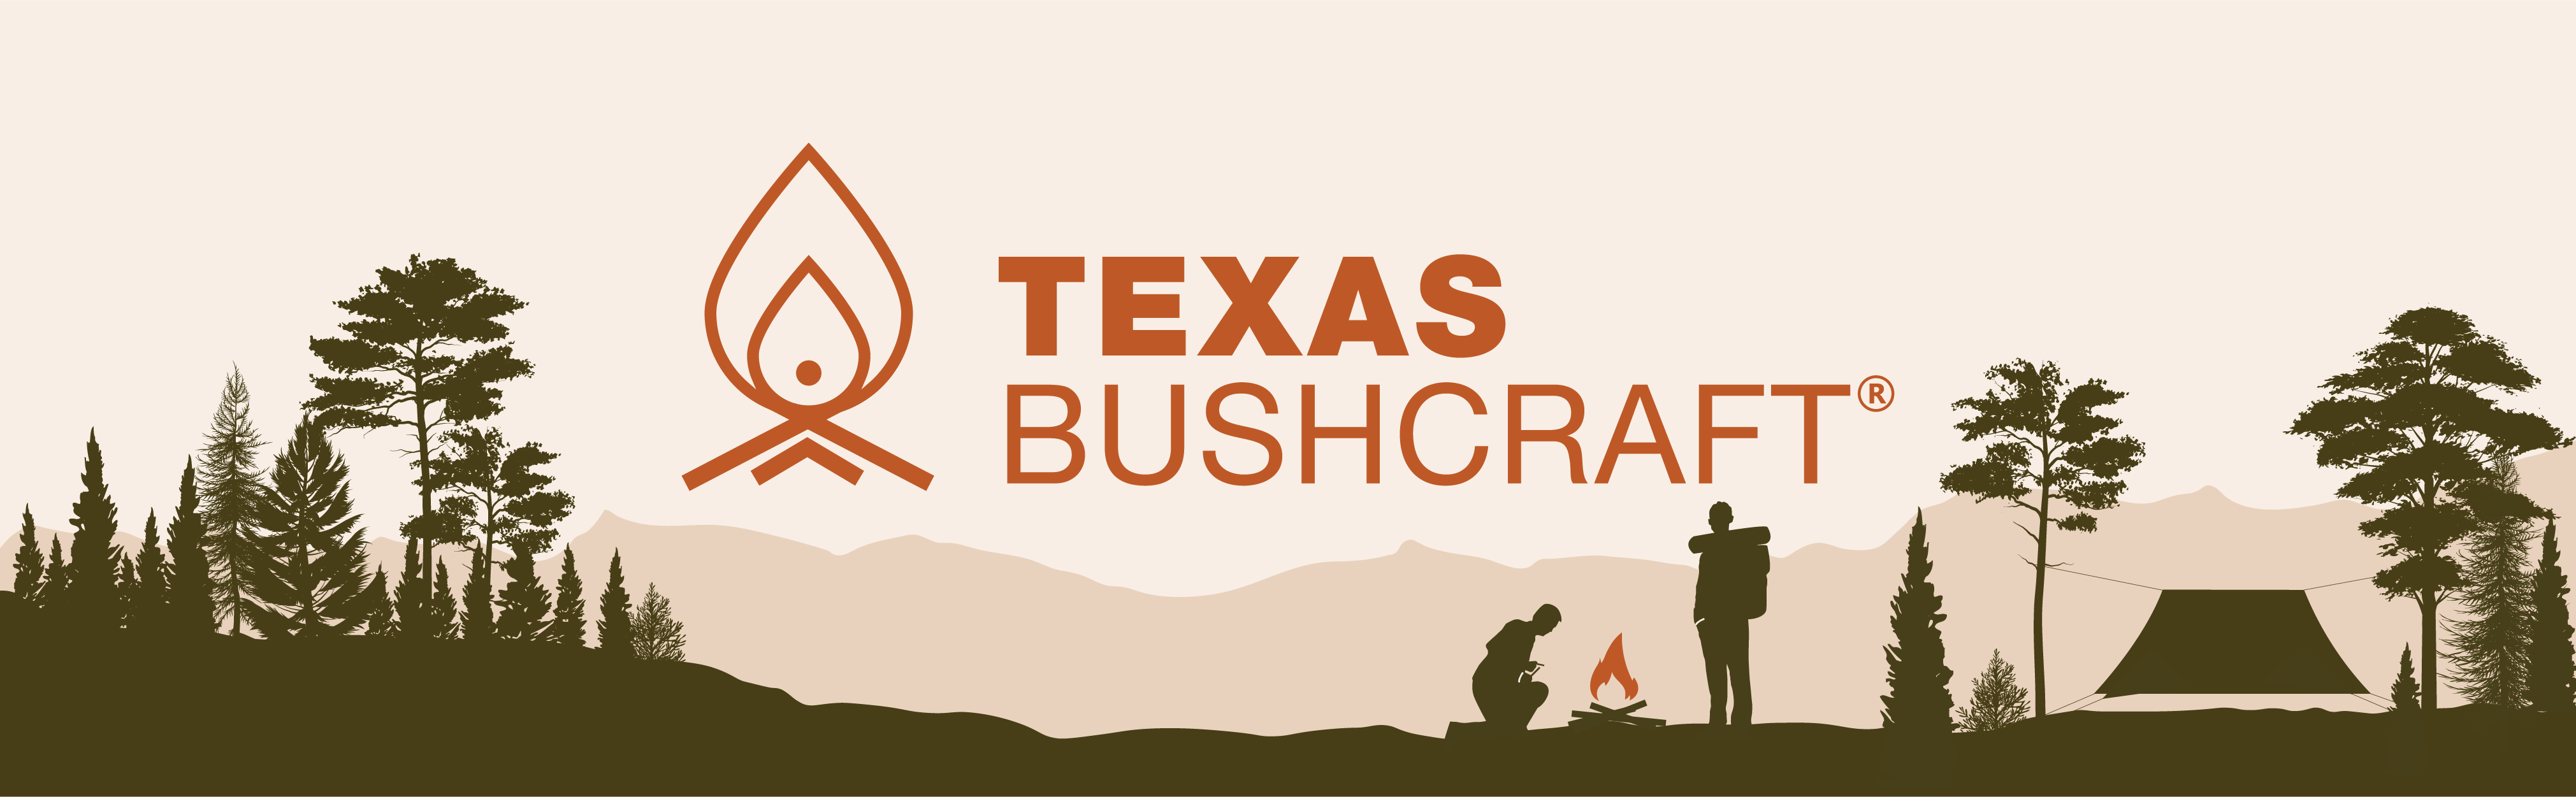 Texas Bushcraft Firestarter